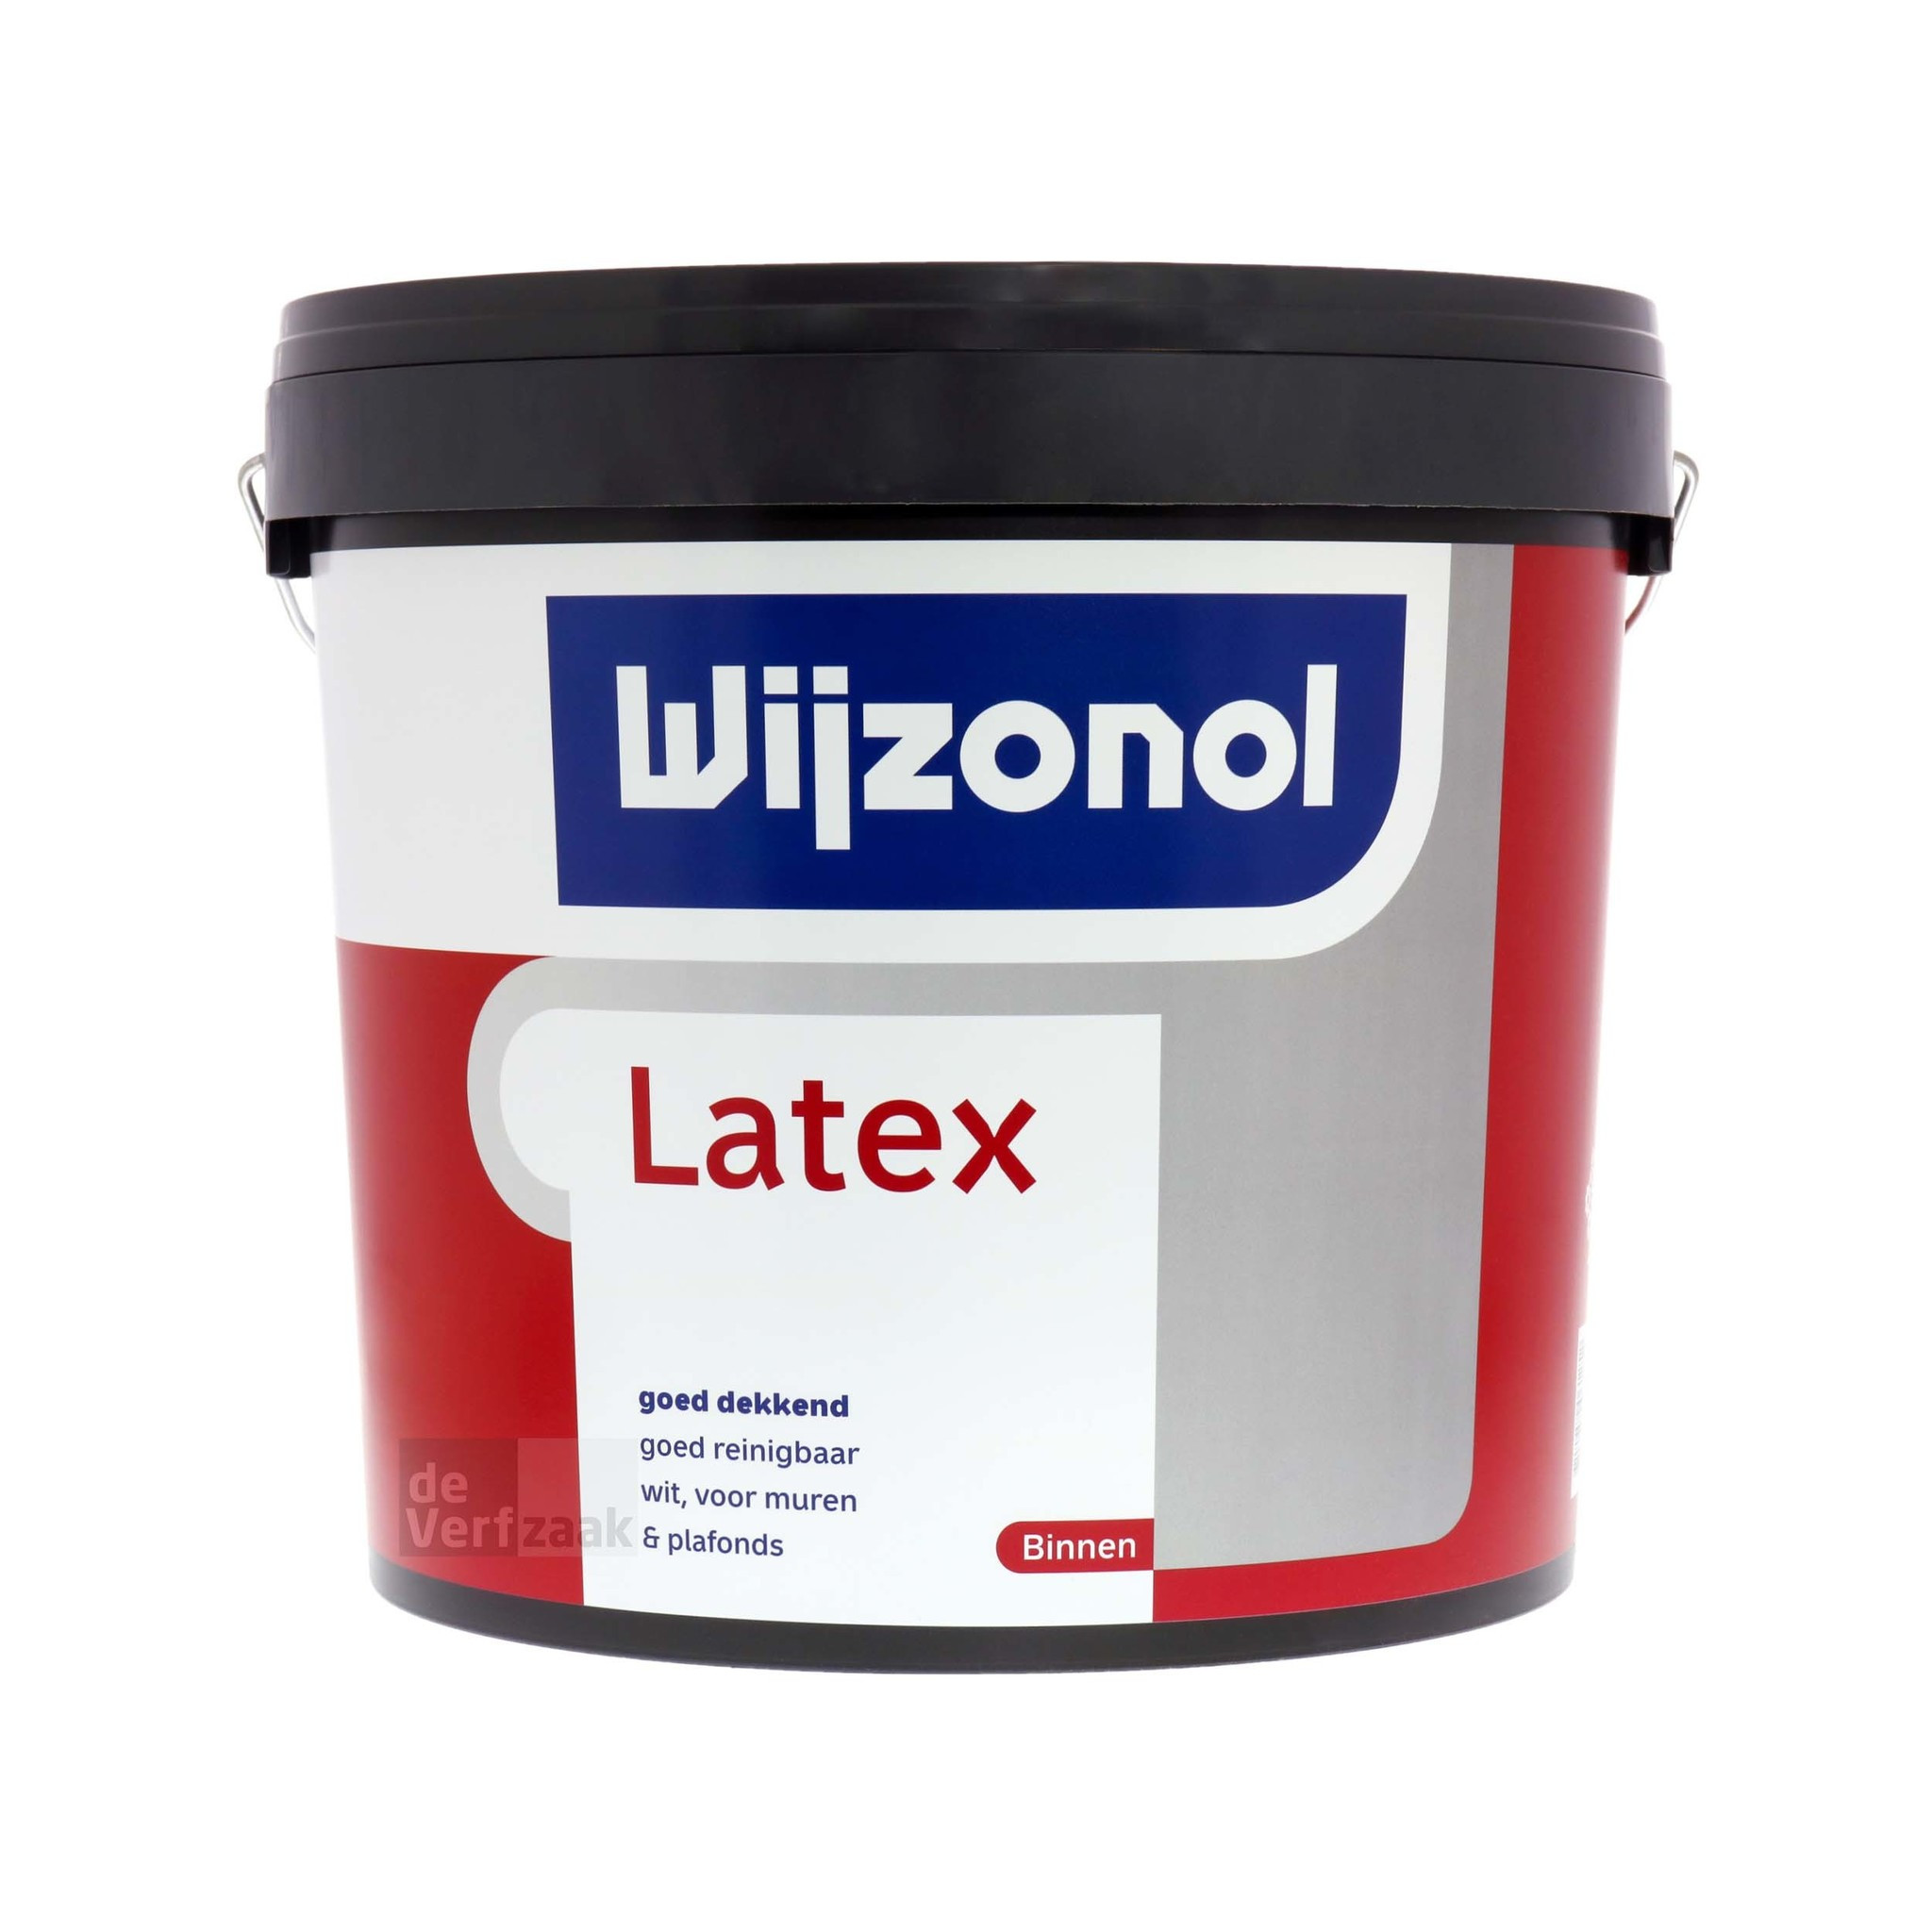 Wijzonol Latex